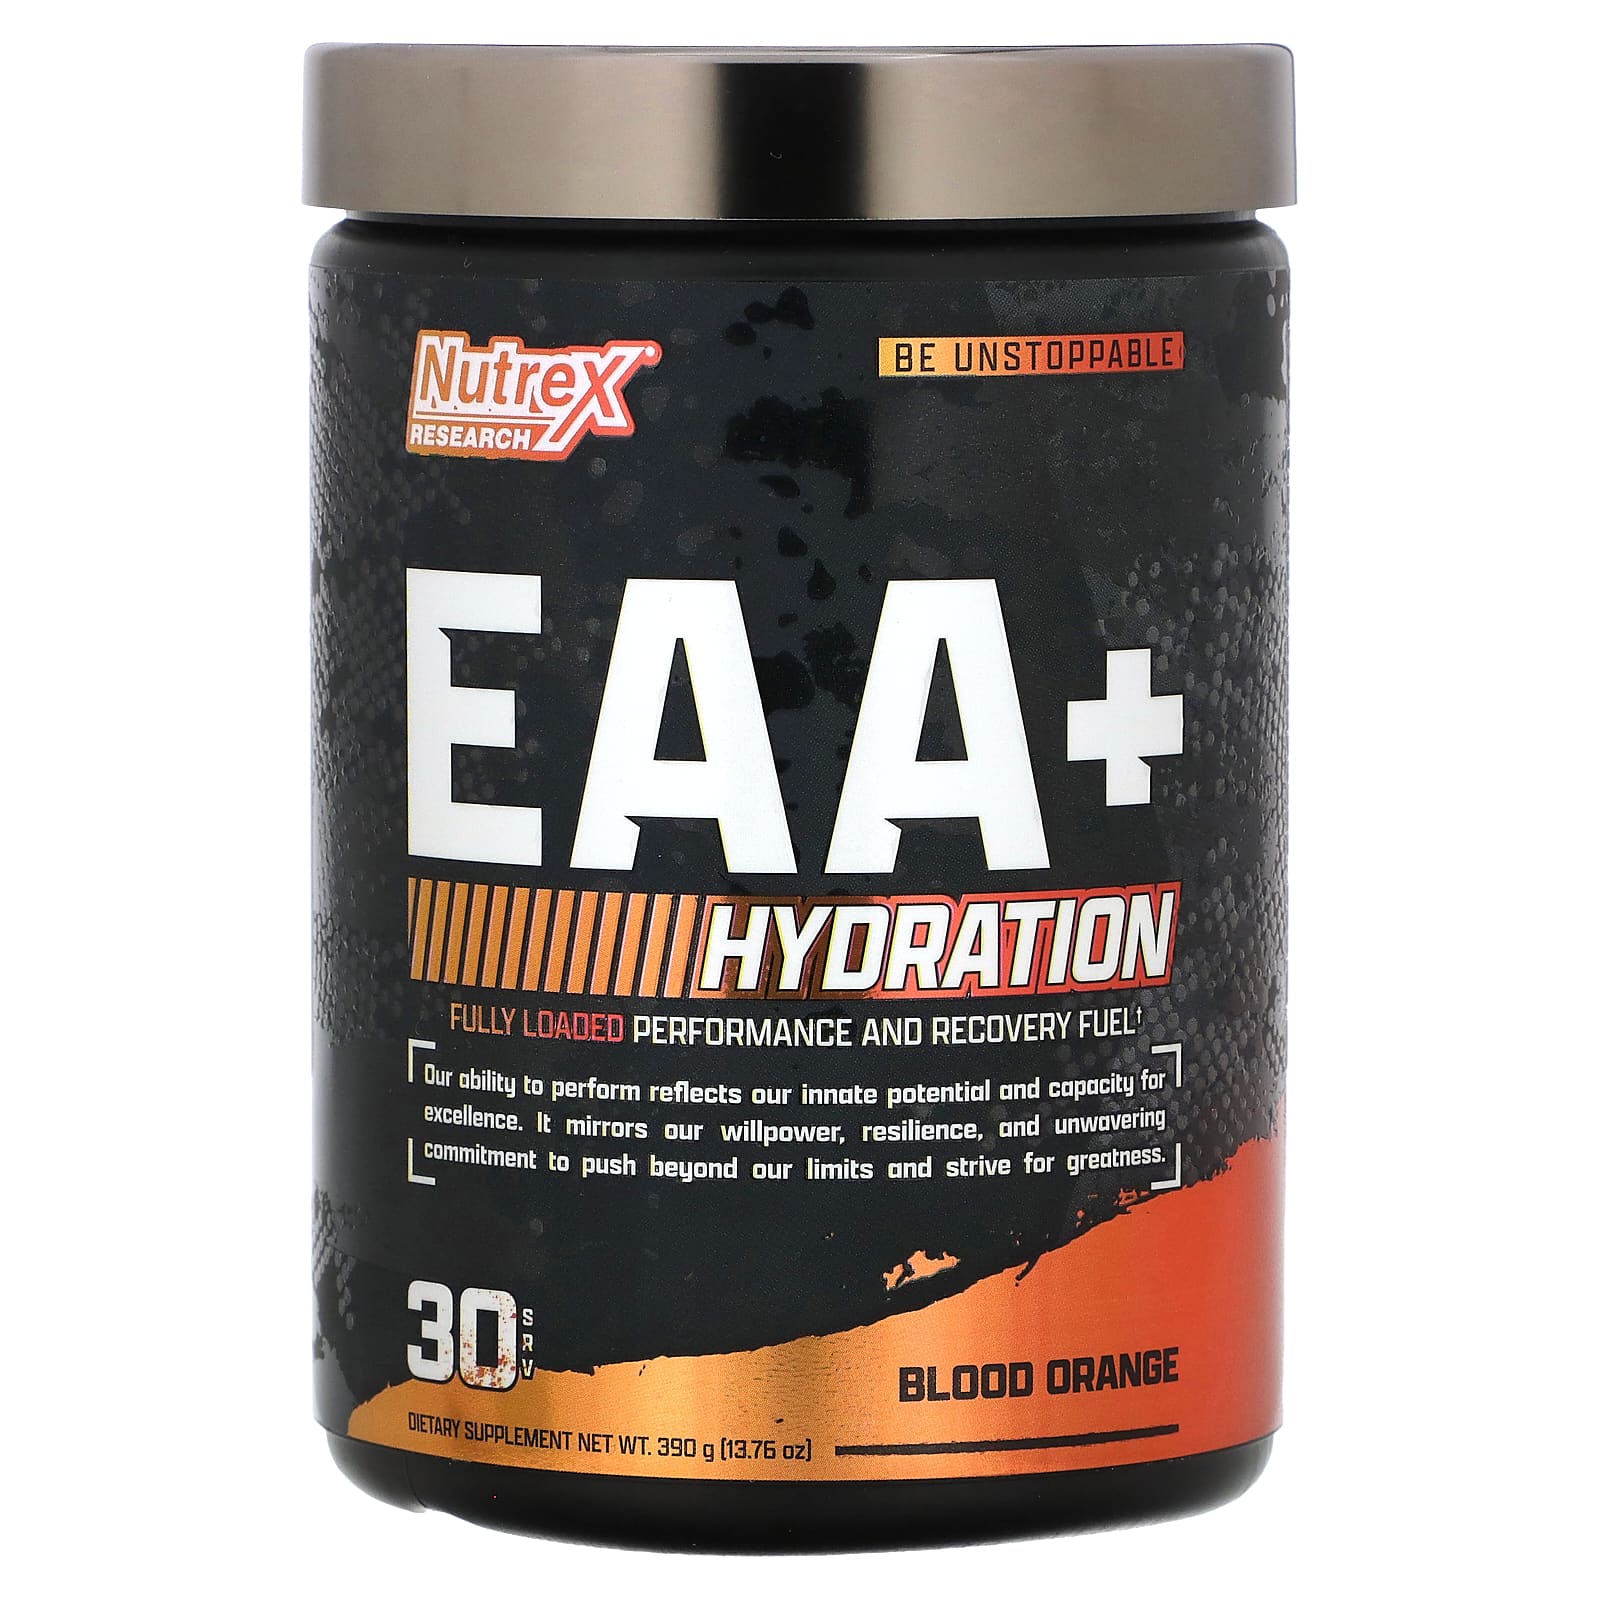 Nutrex Research EAA + Hydration Кровавый апельсин 390 грамм